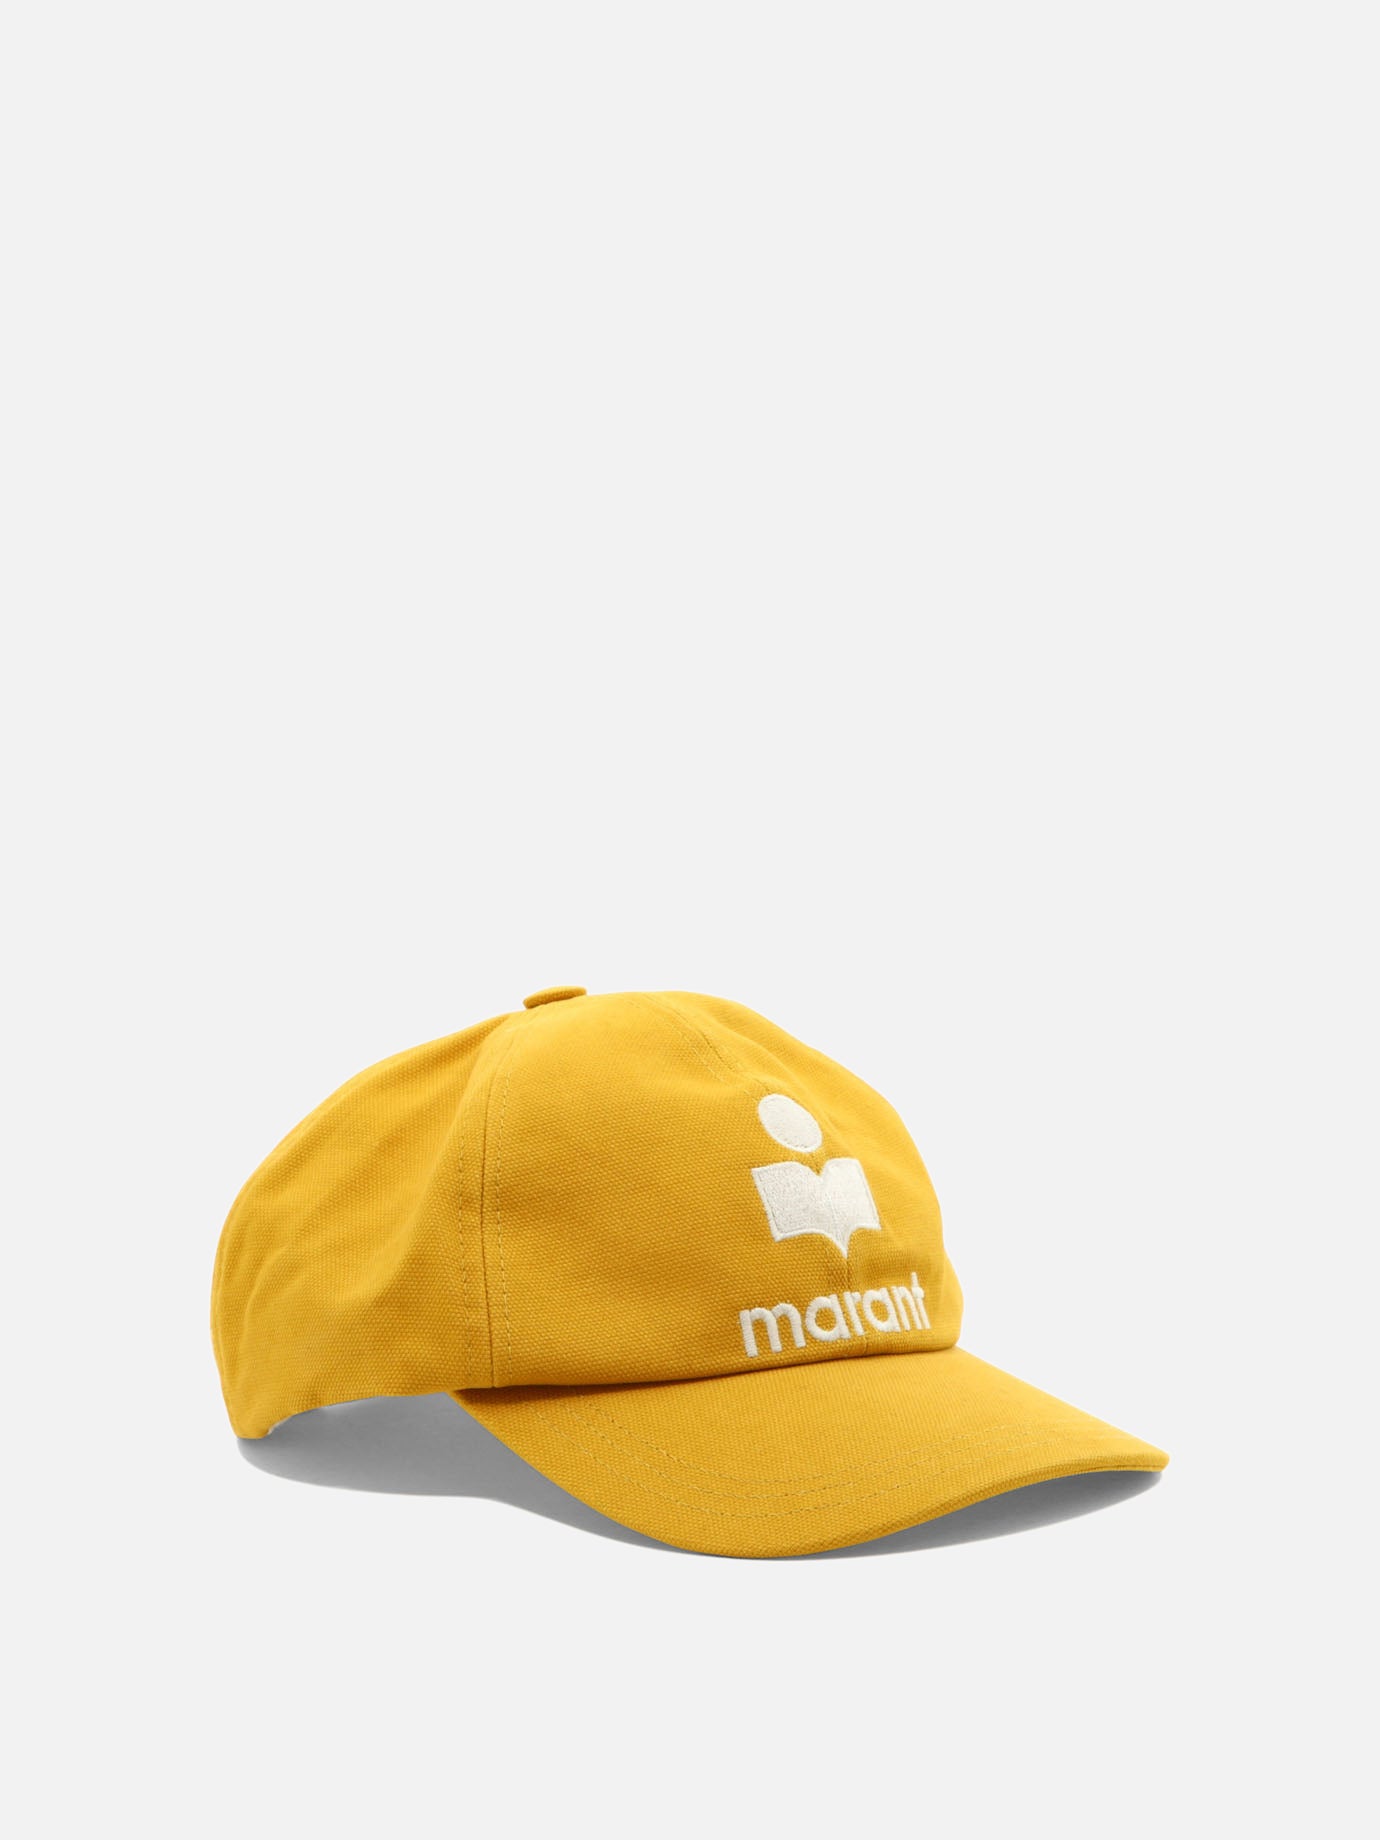 "Tyron" baseball cap